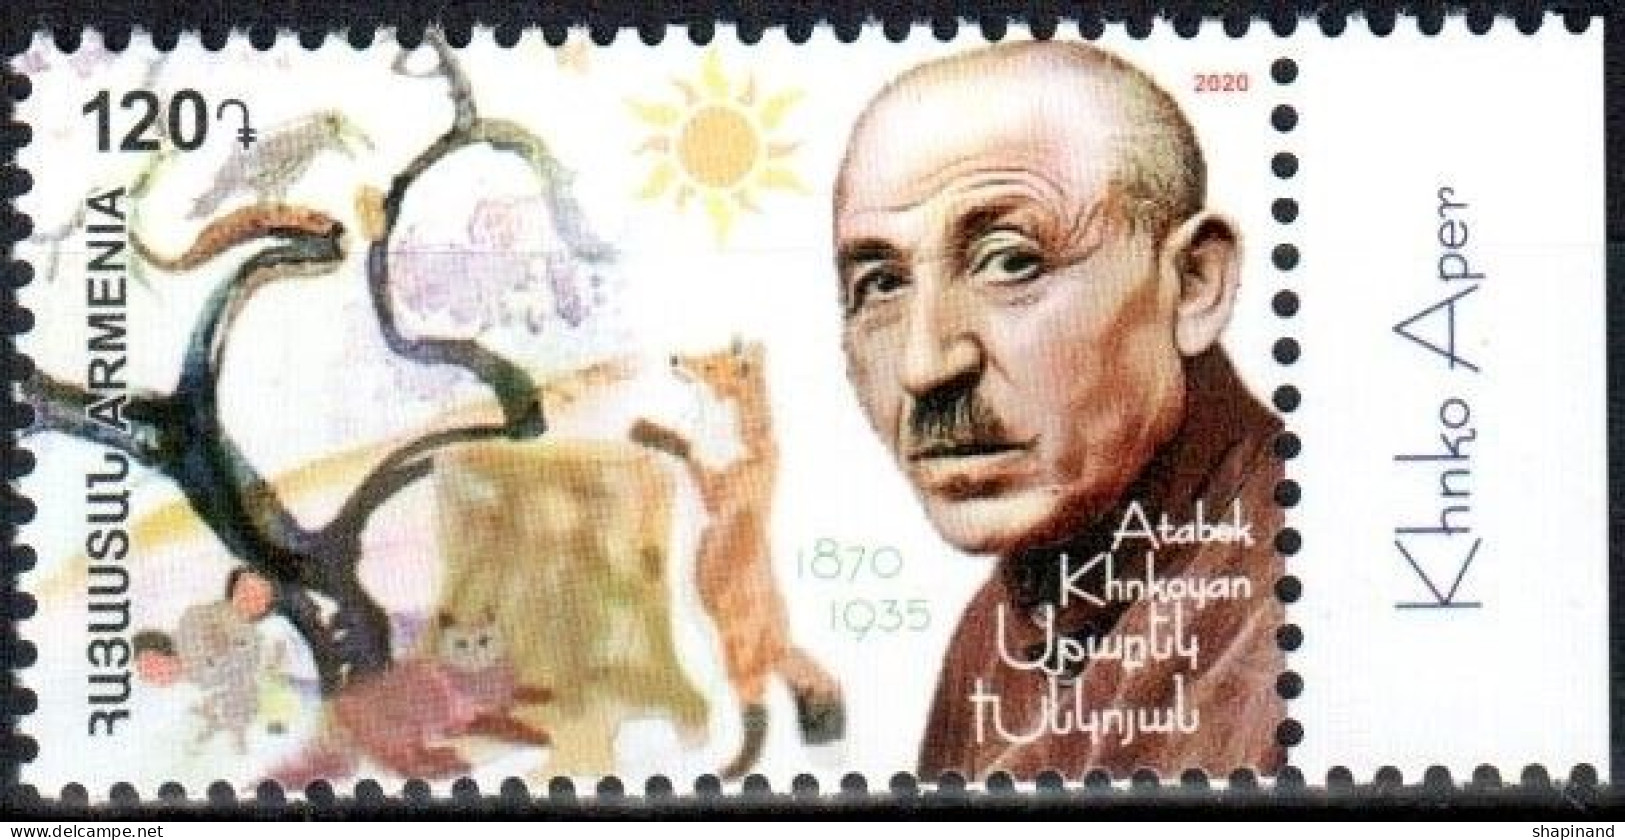 Armenia 2020 The Prominent Armenian Children’s Writer Atabek Khnkoyan (Khnko Aper, 1870-1935) 1v Quality:100% - Armenië